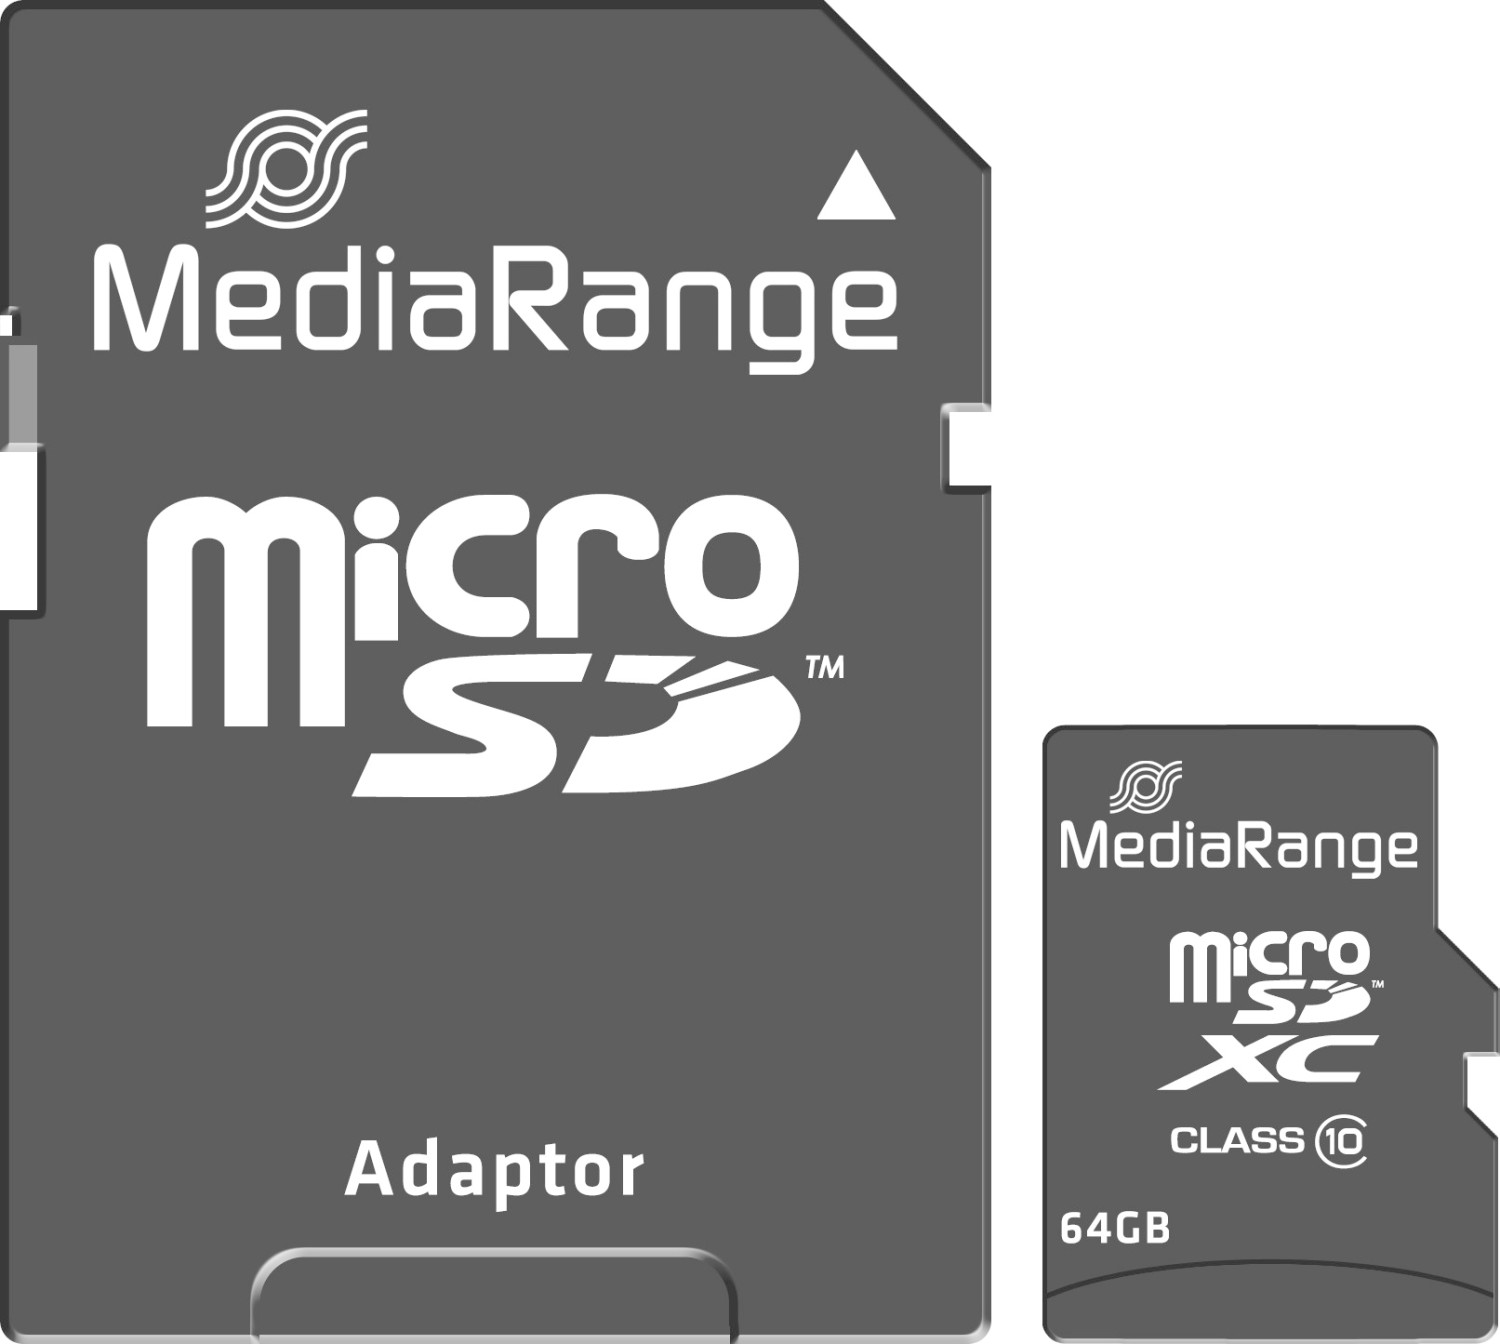 MediaRange microSDXC Class 10 64GB (MR955)